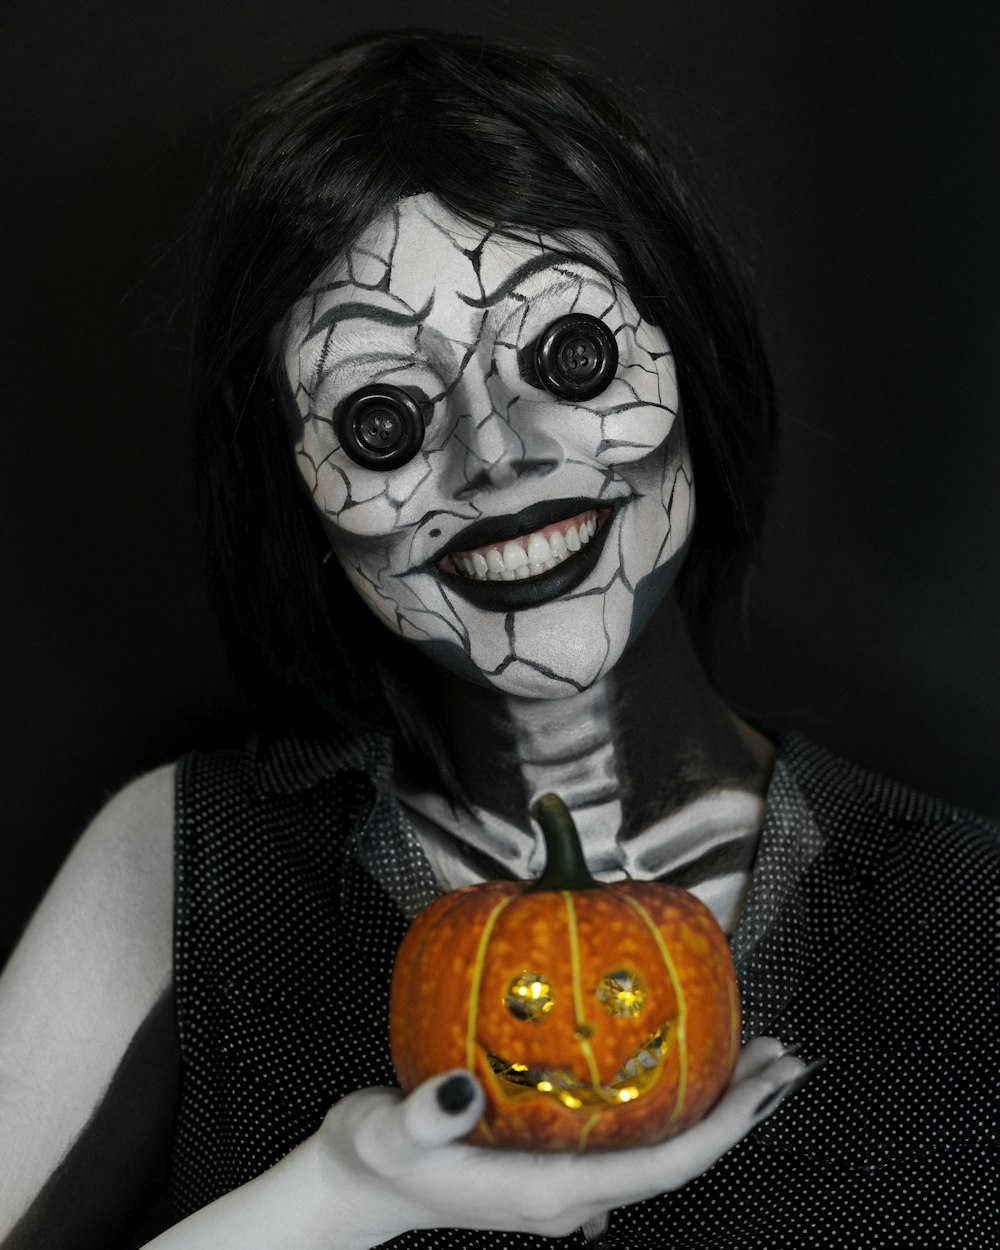 a woman in a halloween costume holding a pumpkin